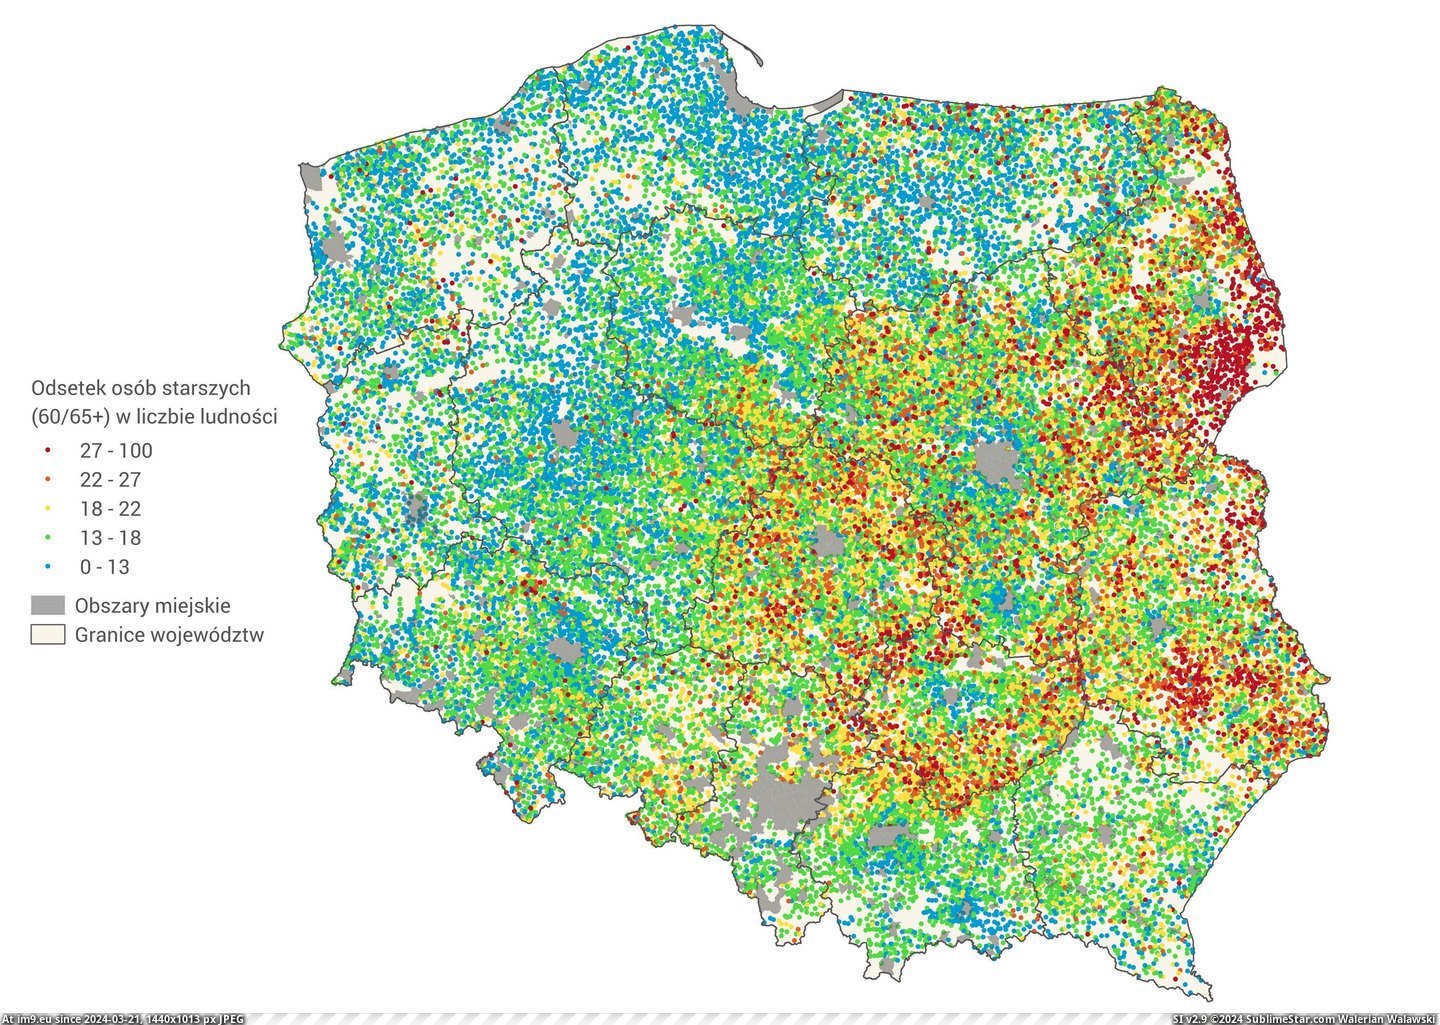 #People #Percentage #Aged #Poland [Mapporn] Villages of Poland by percentage of people aged 65+ [3507x2480px][OS] in comments Pic. (Bild von album My r/MAPS favs))